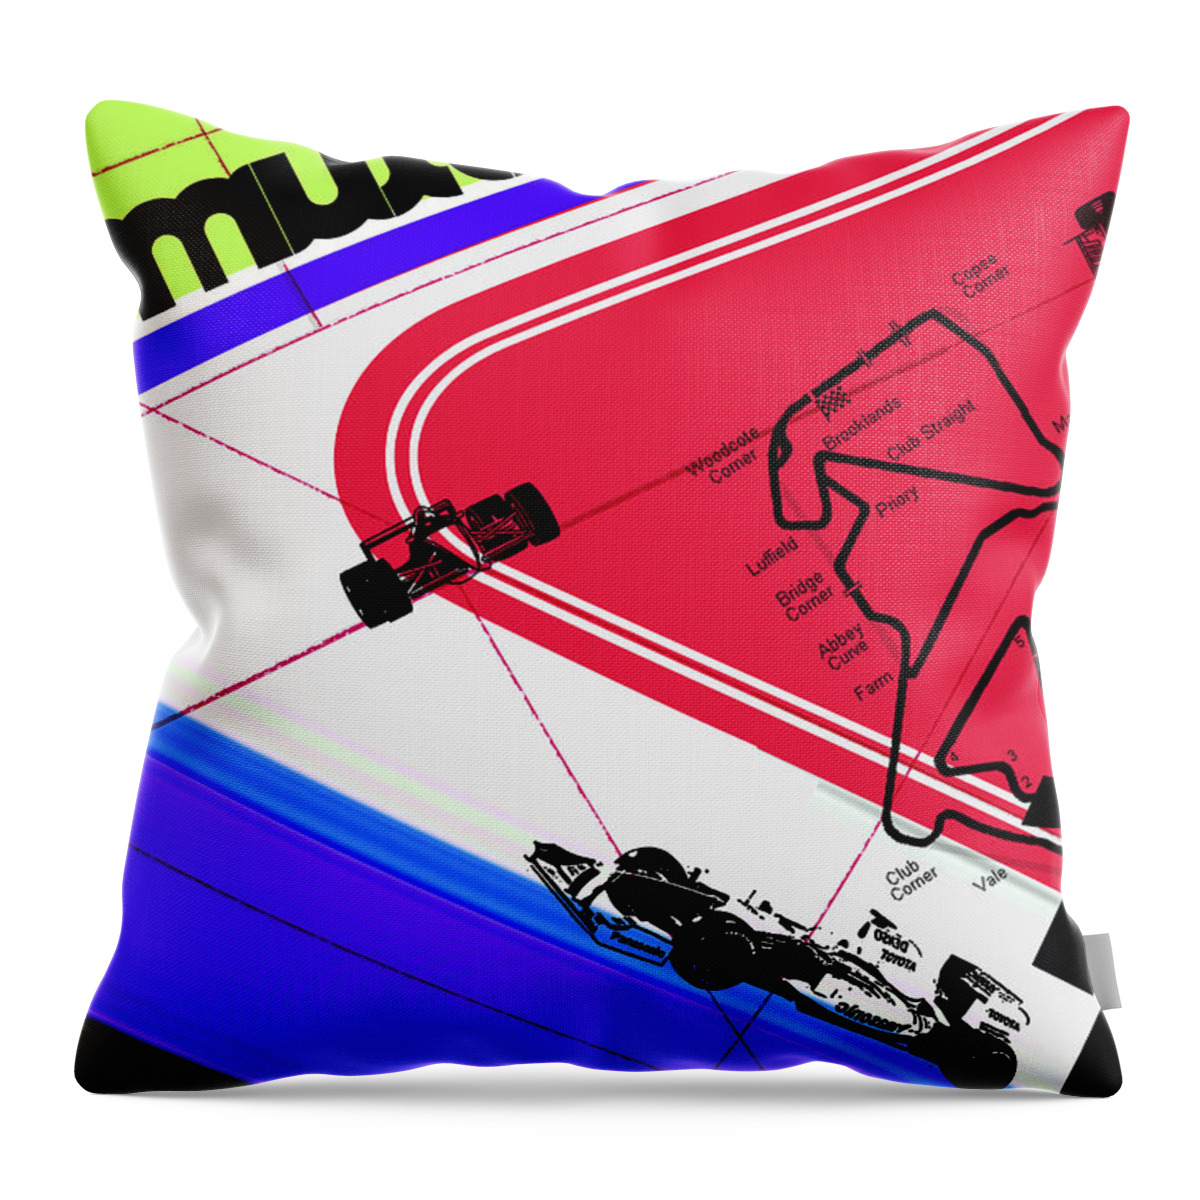 F1 Throw Pillow featuring the digital art F1 by Naxart Studio